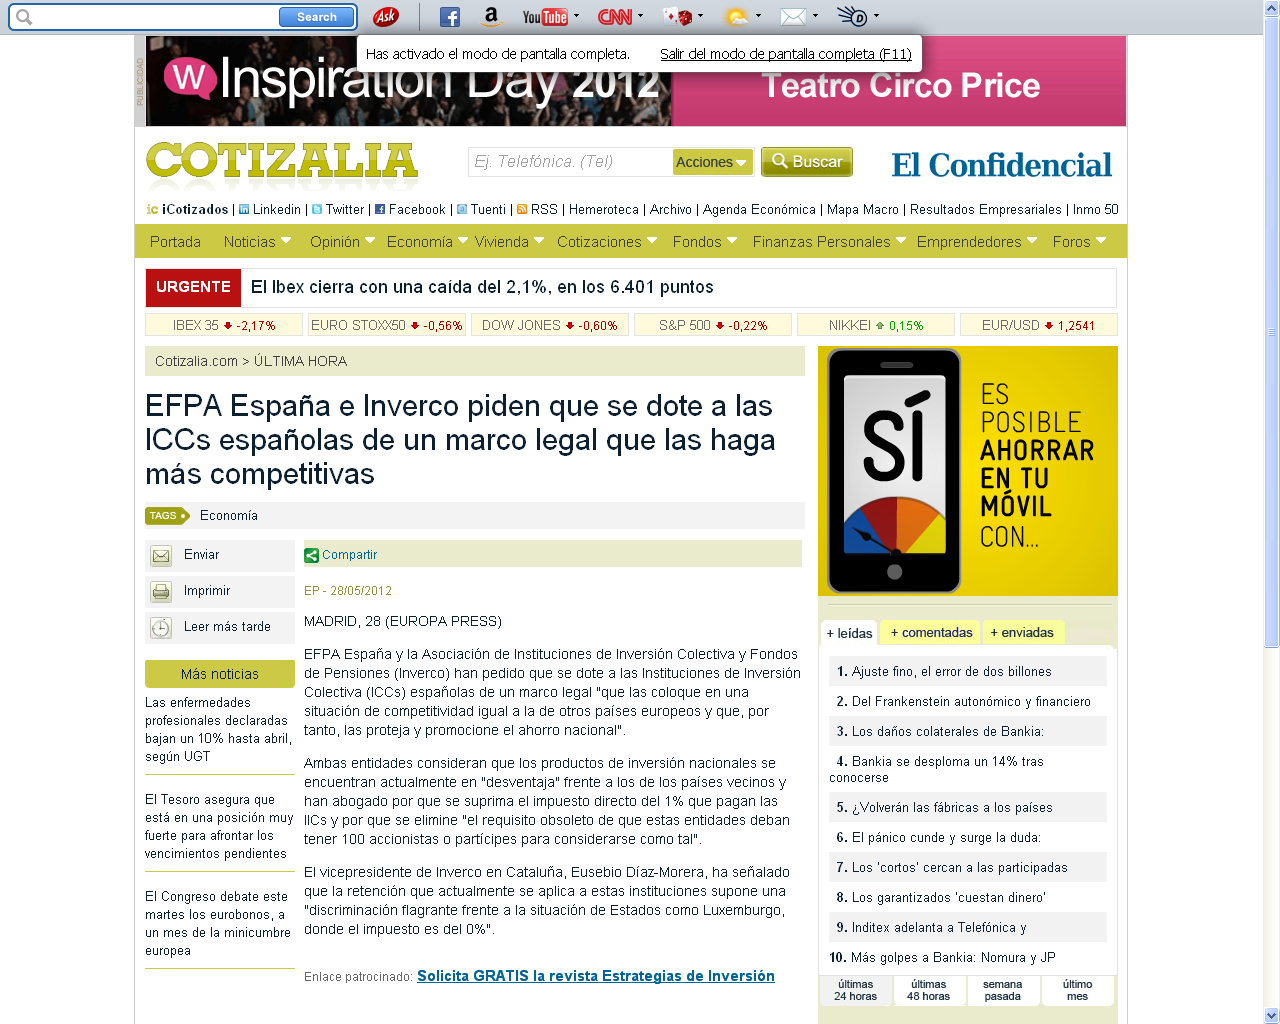 Medio: Cotizalia Fecha: 28.05.2012 Cliente: EFPA Link: http://www.cotizalia.com/ultima-hora/2012/05/espana-inverco-piden-espanolas-marco-legal-20120528-487790.